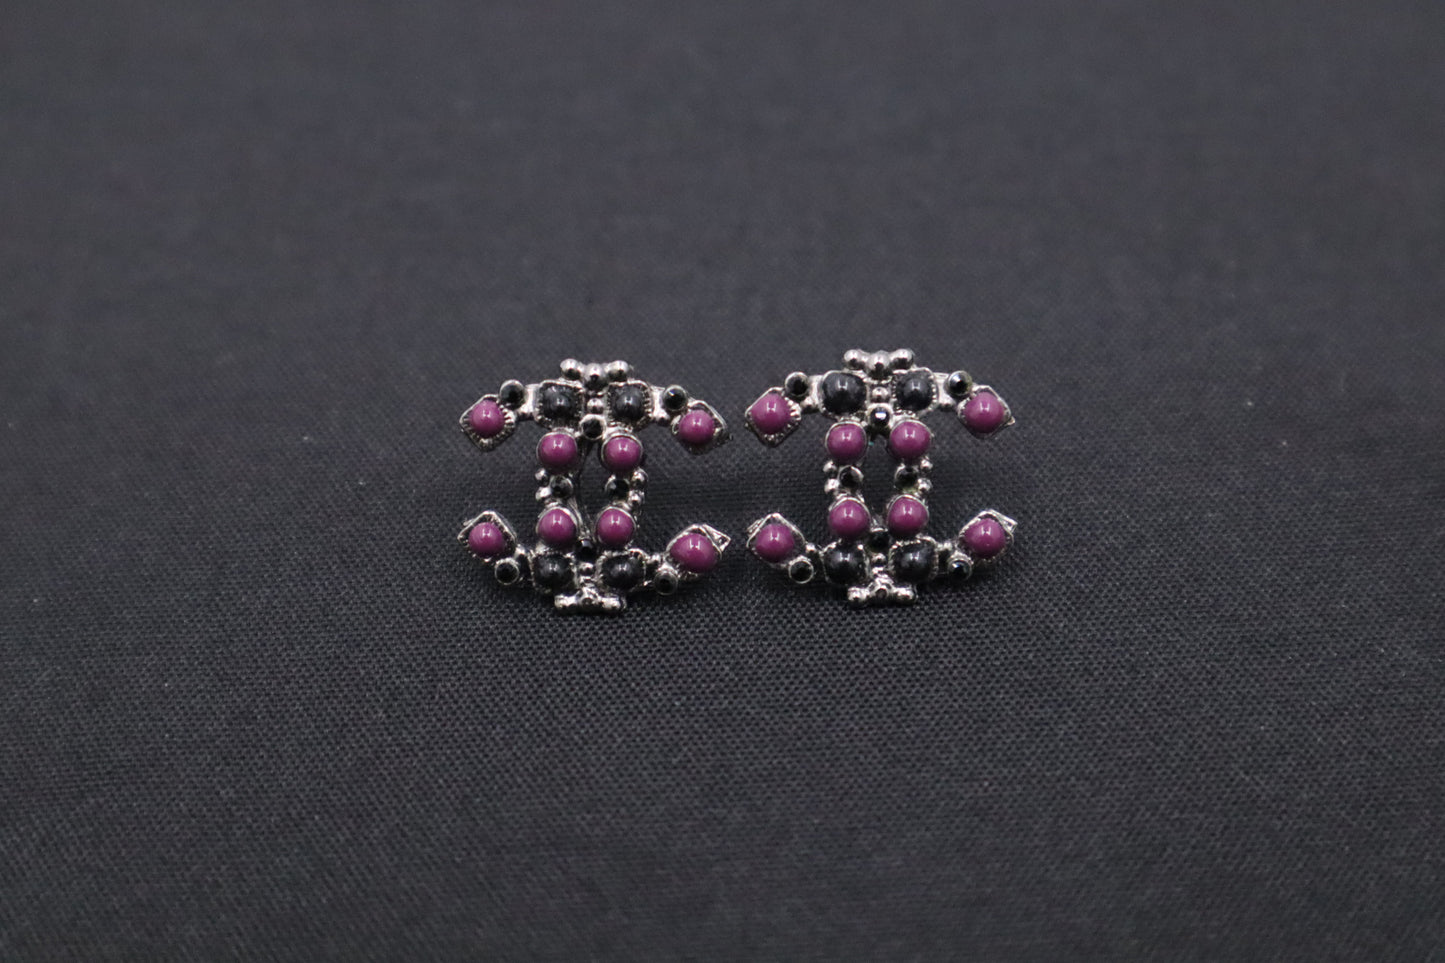 Chanel Stud Earrings with Black & Purple Stones